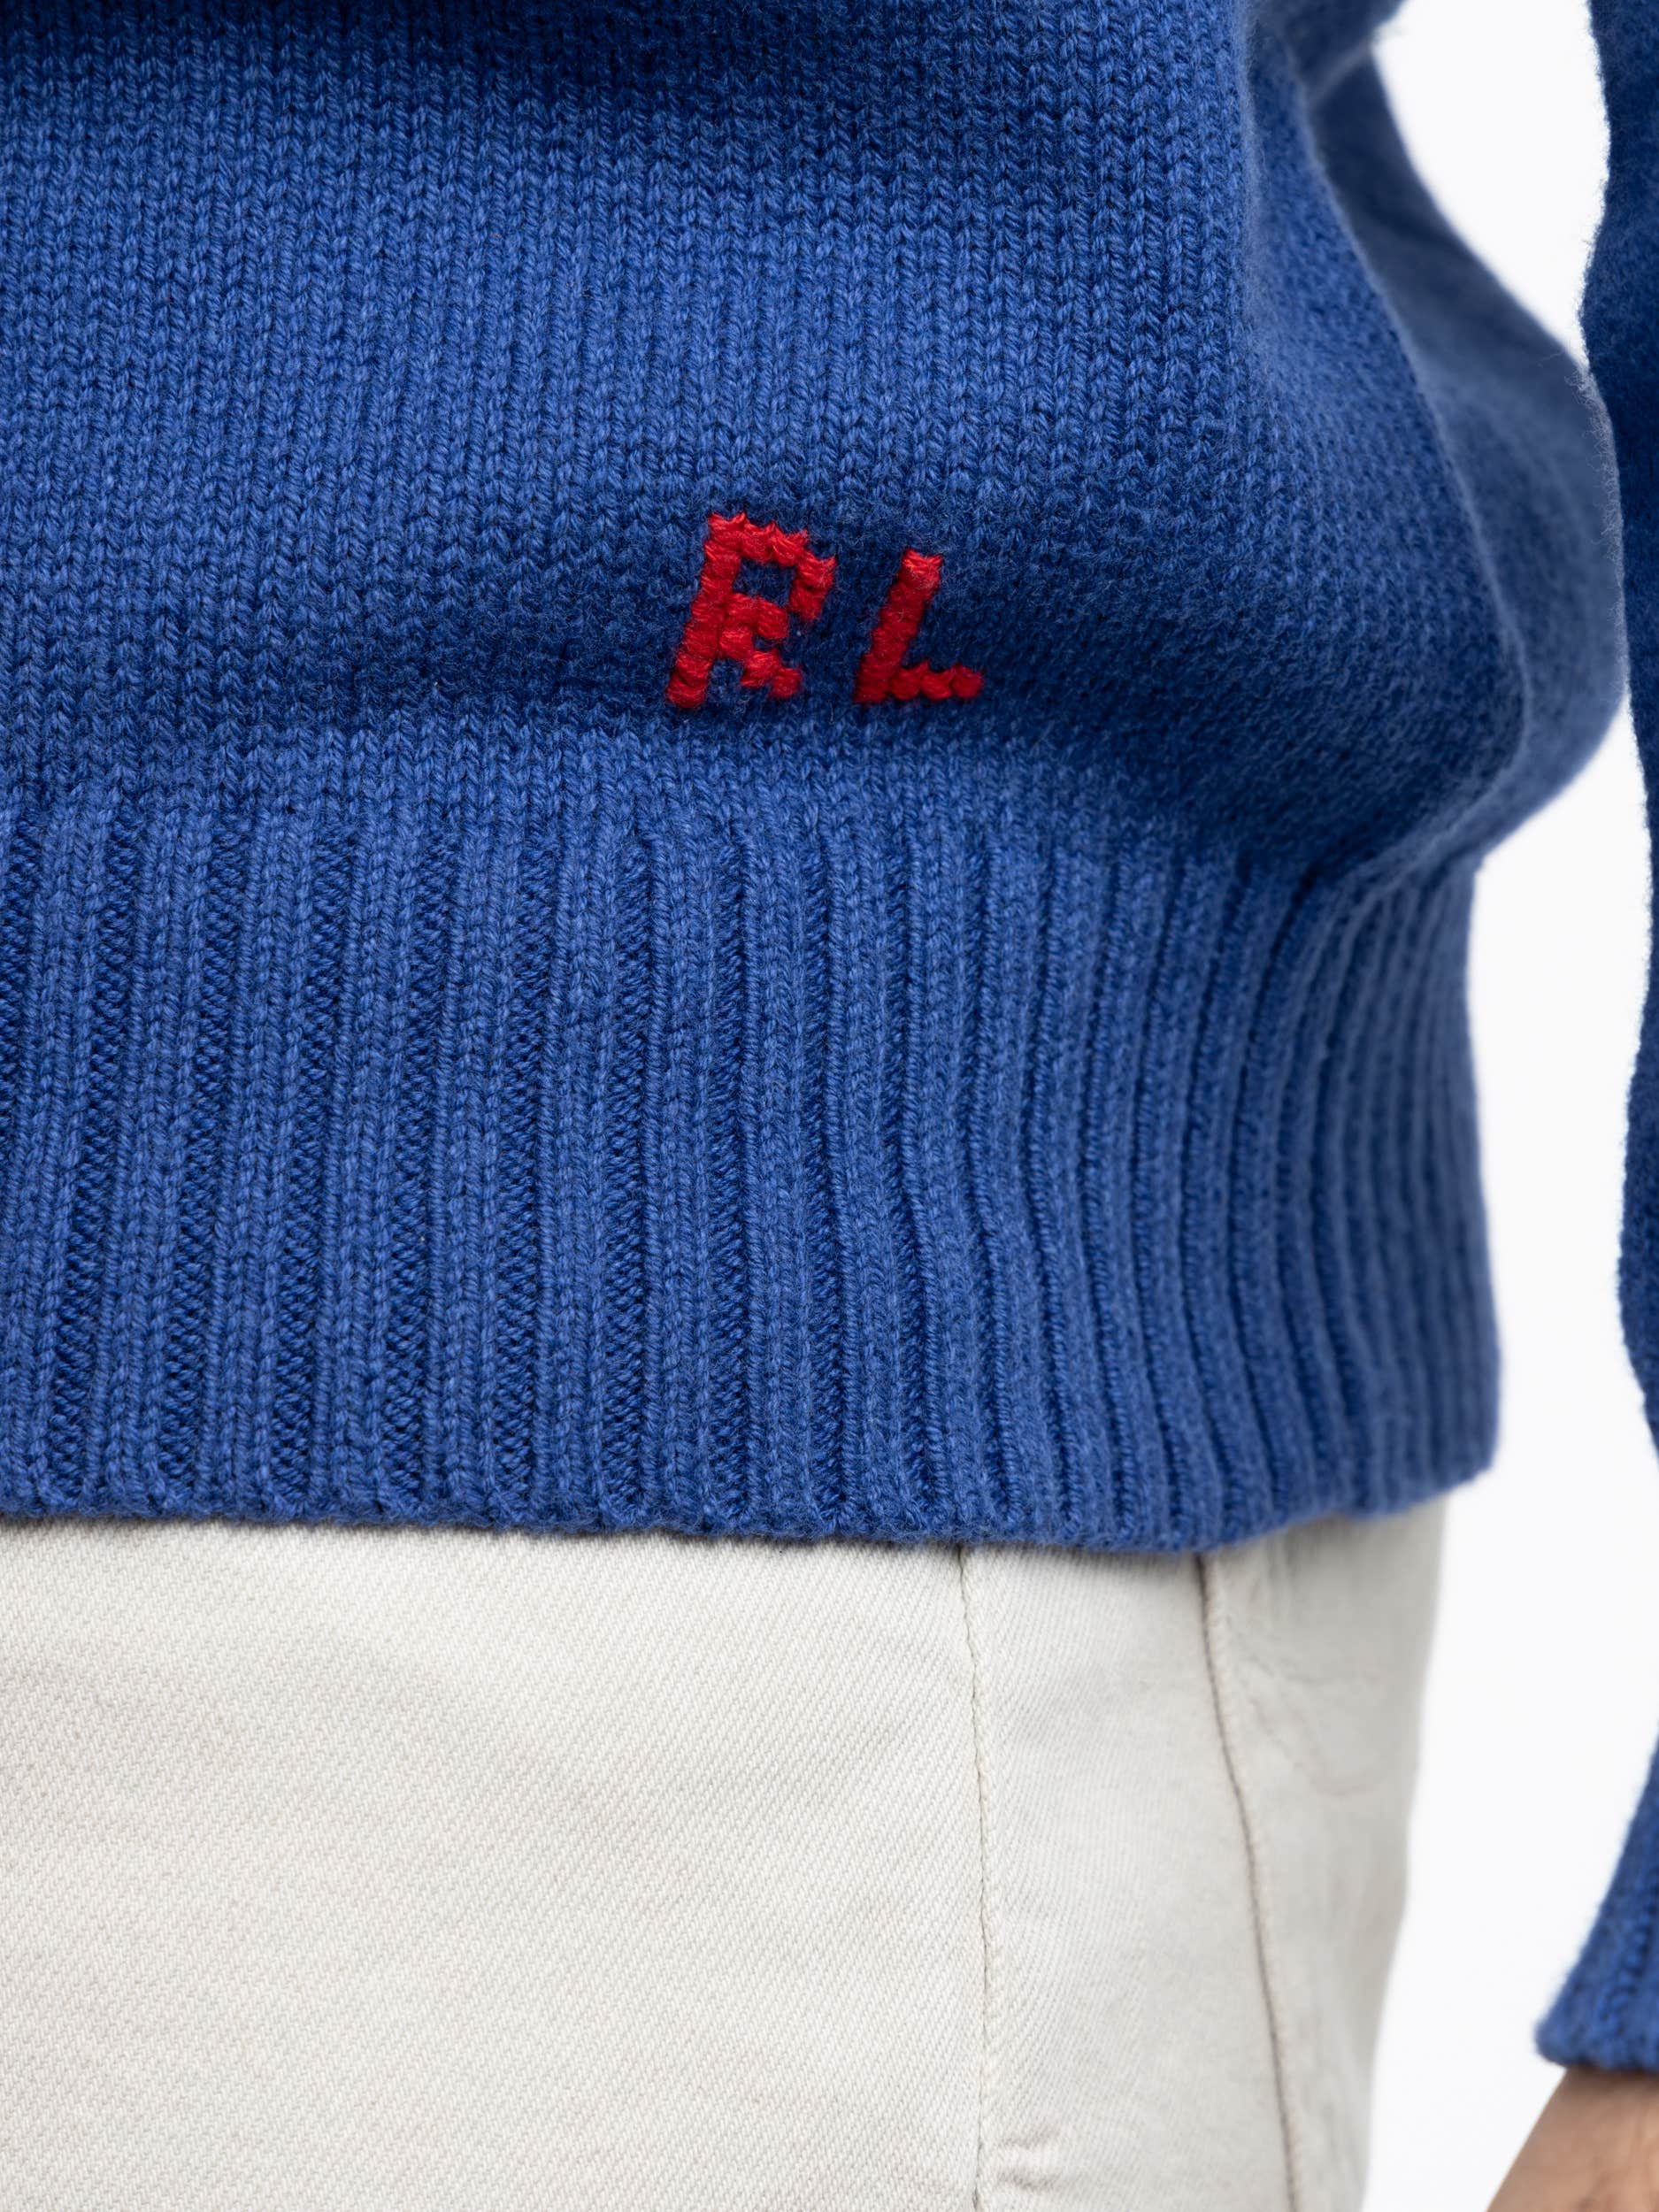 Blue Polo Bear Sweater